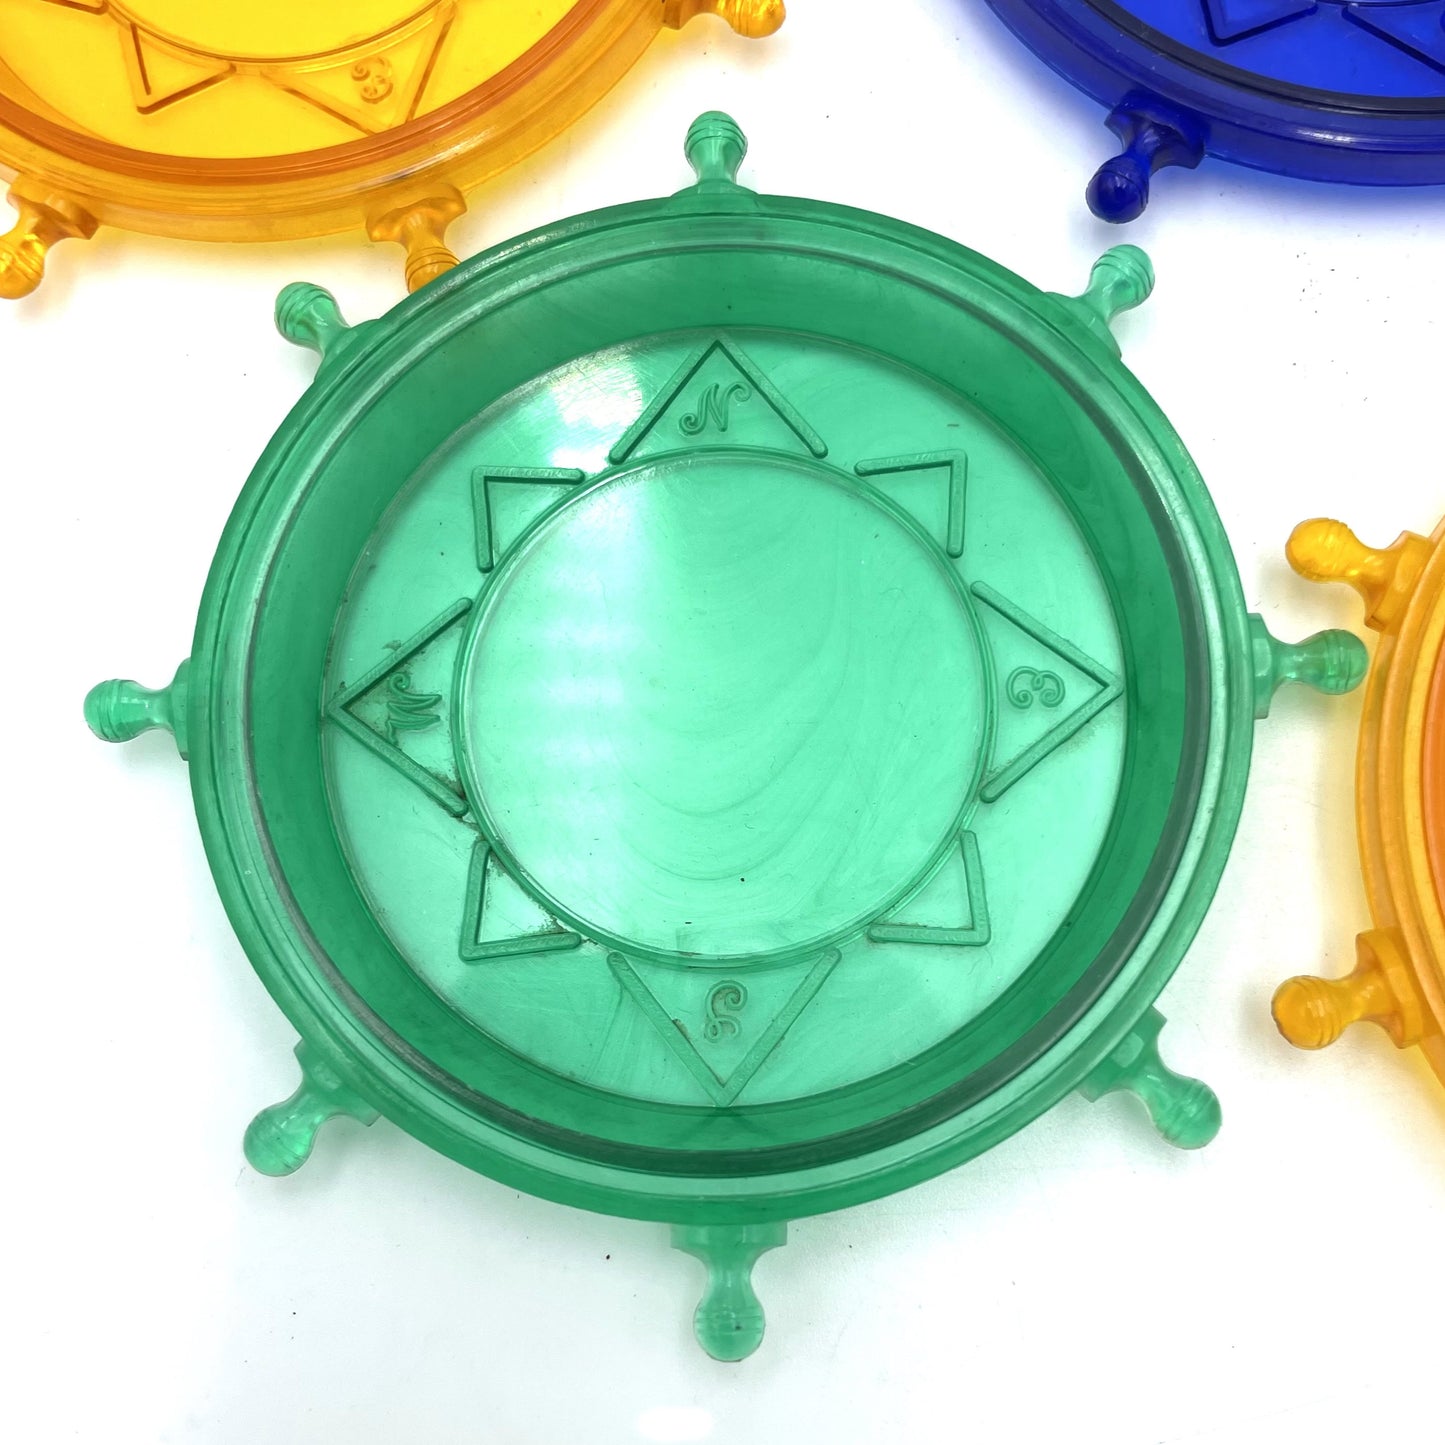 Eight Colourful Plastic Coasters - 7.5cm